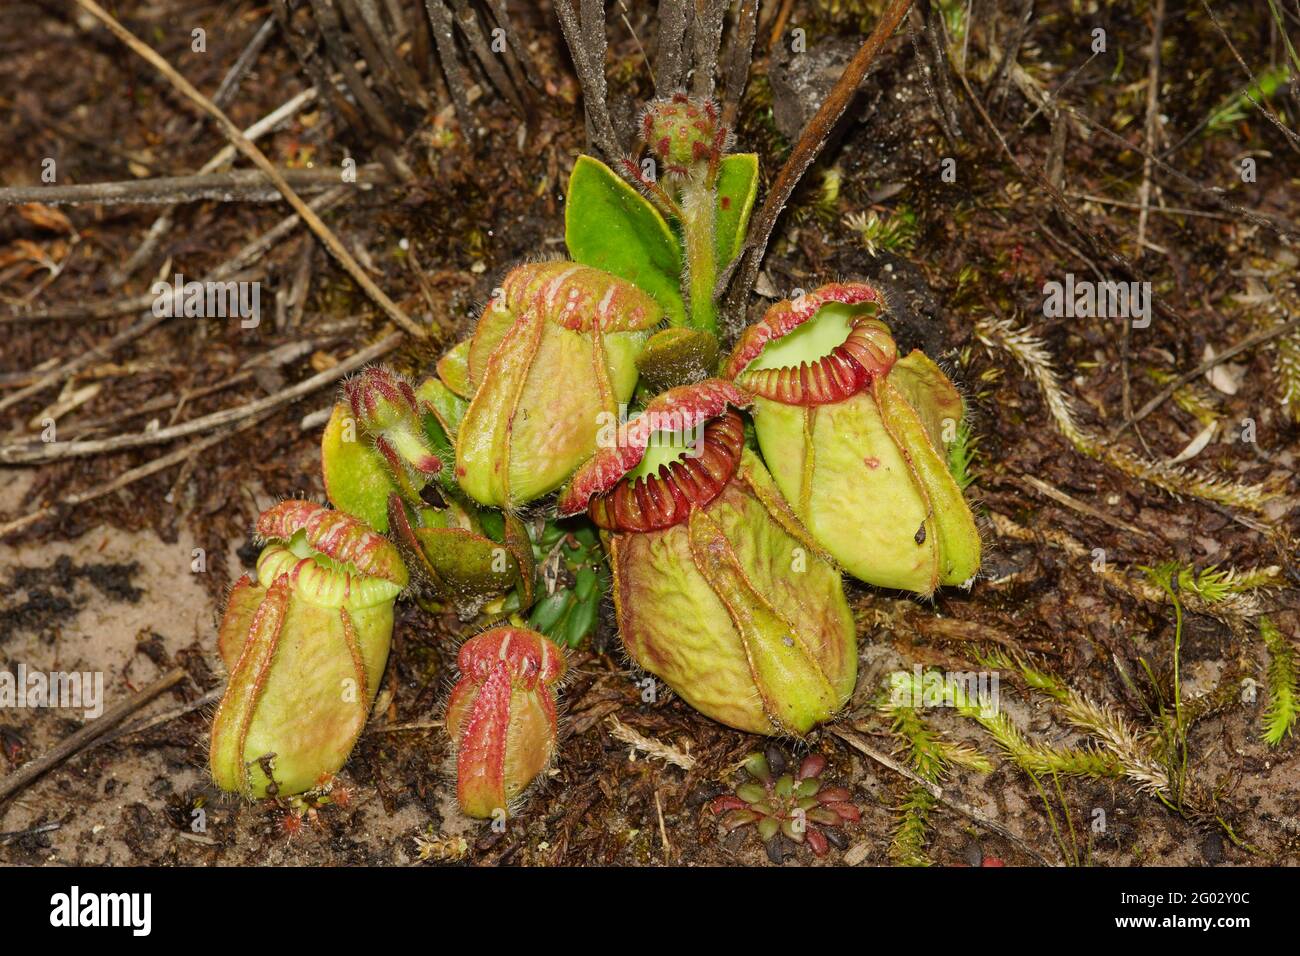 Cephalotus follicularis, the Western Australian pitcher plant, in natural habitat with flower stalks Stock Photo